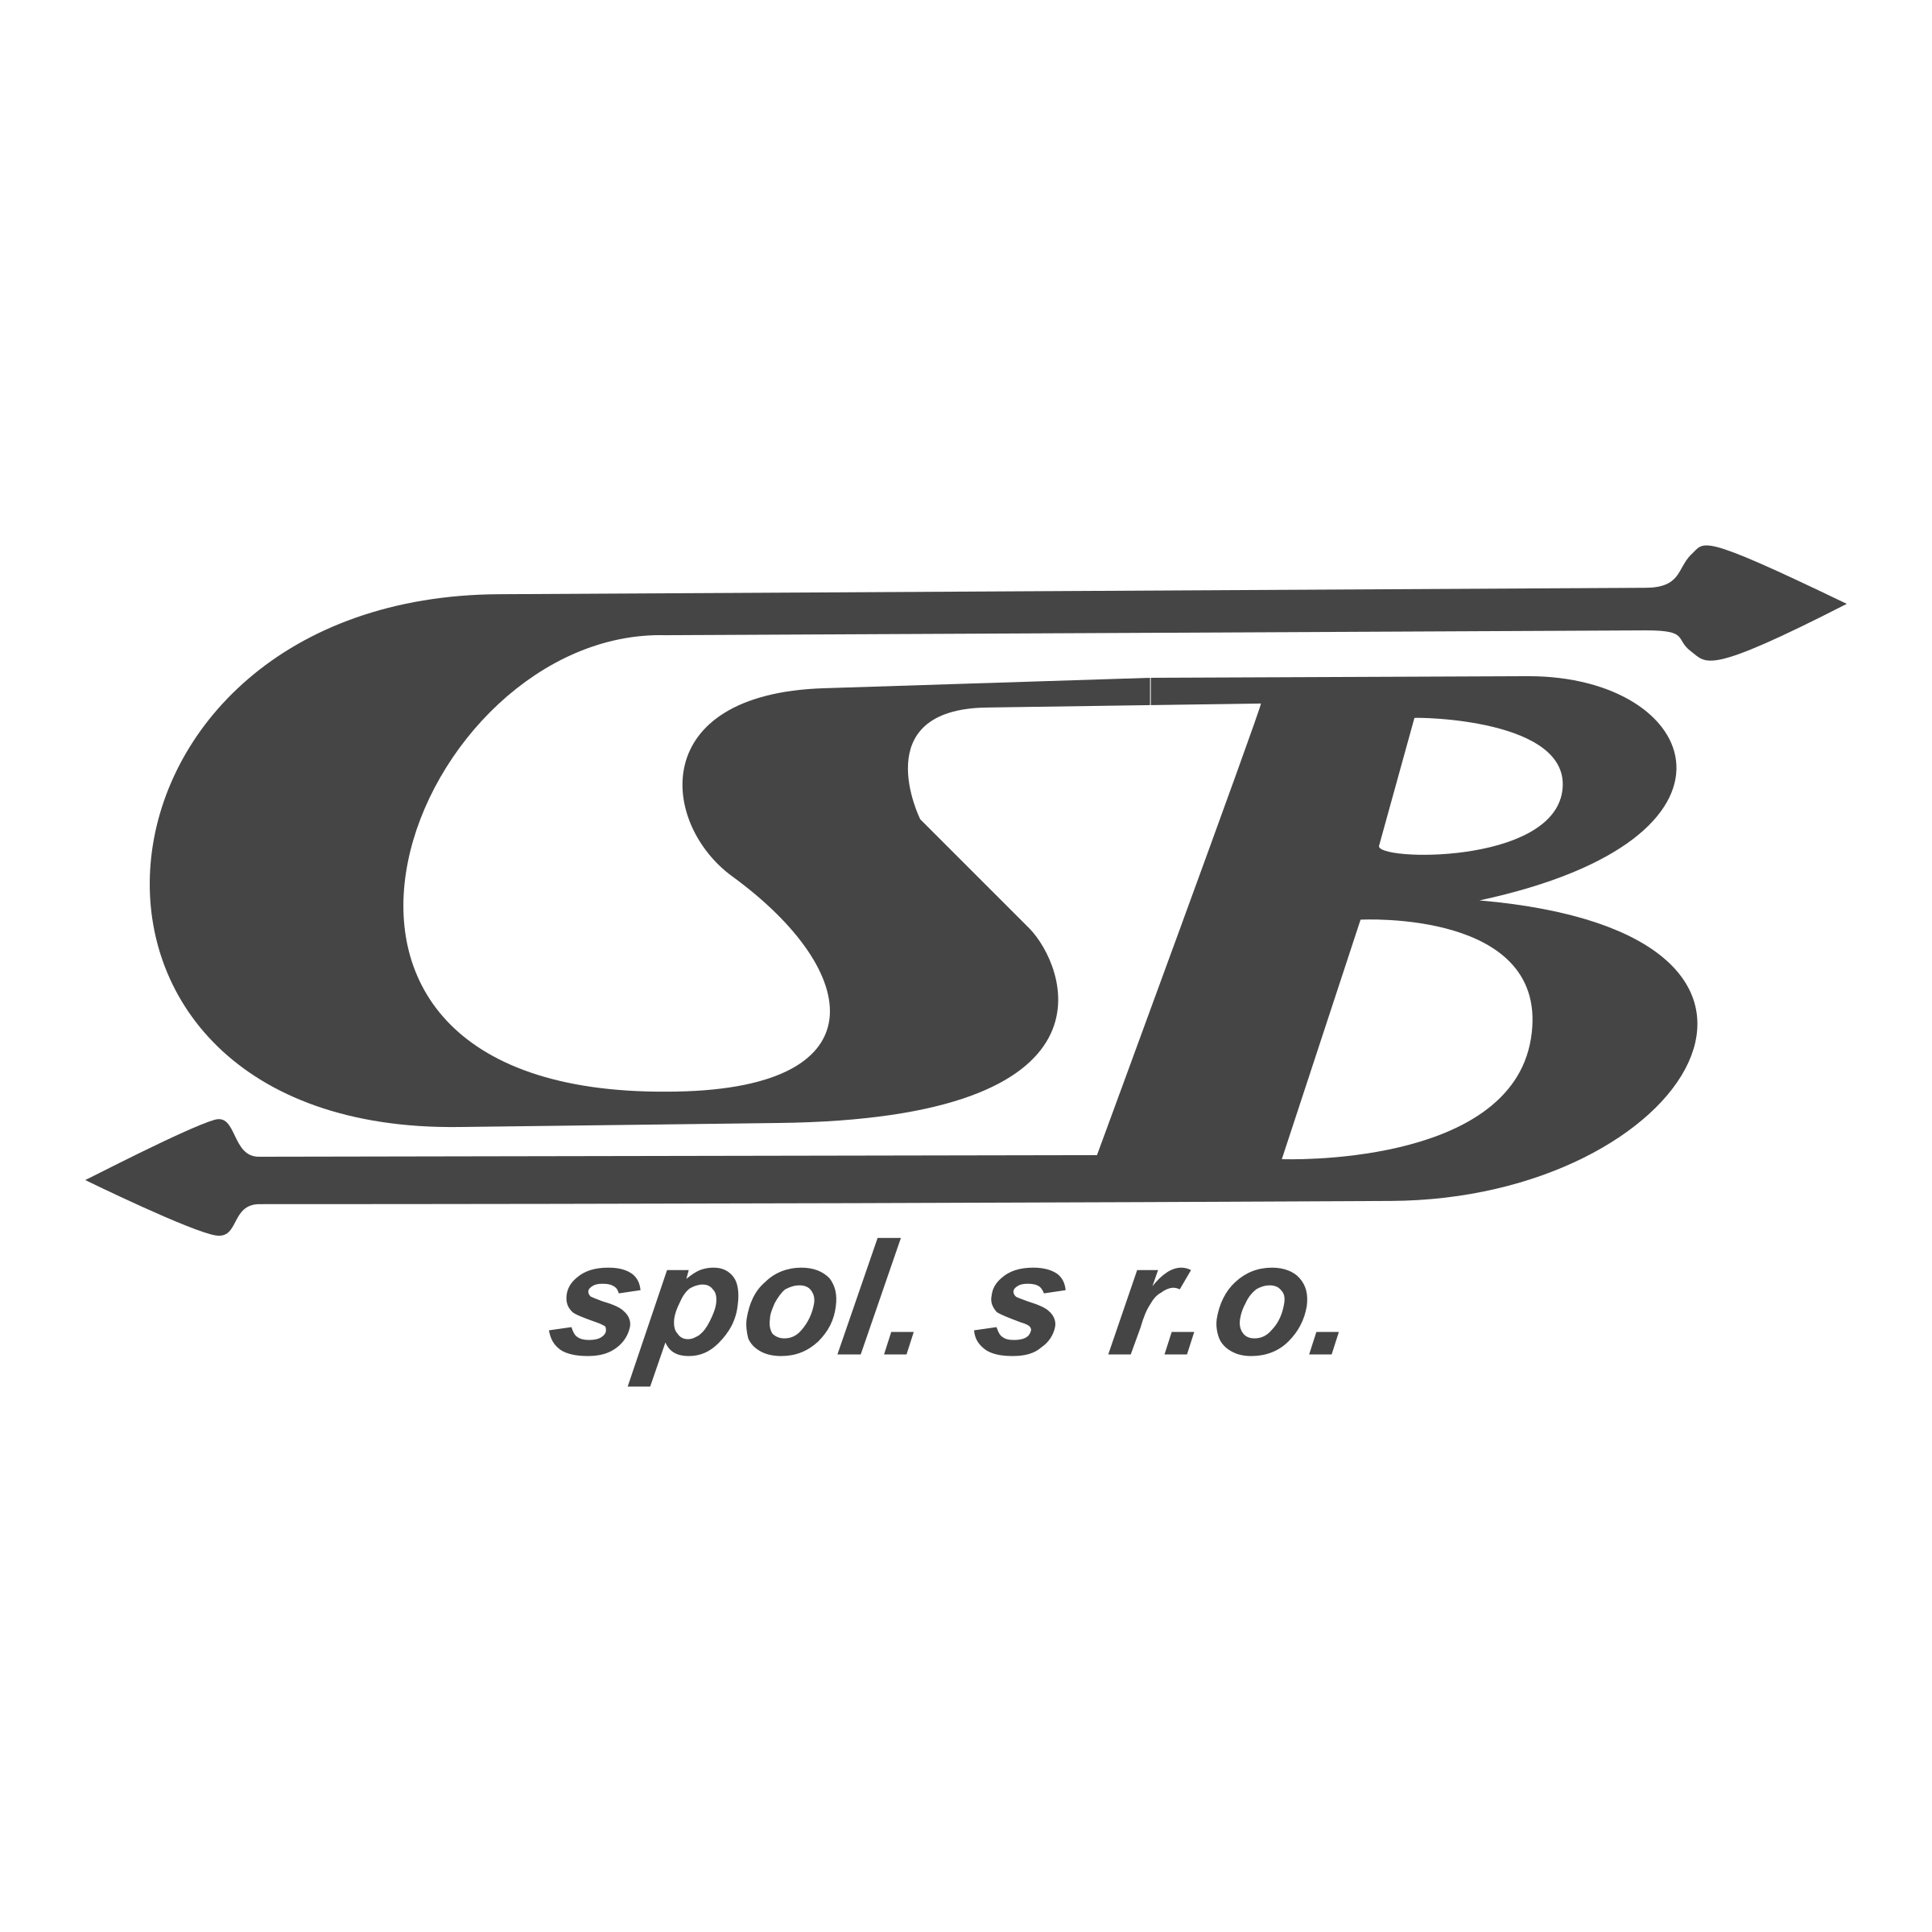 CSB Logo - CSB Logo PNG Transparent & SVG Vector - Freebie Supply